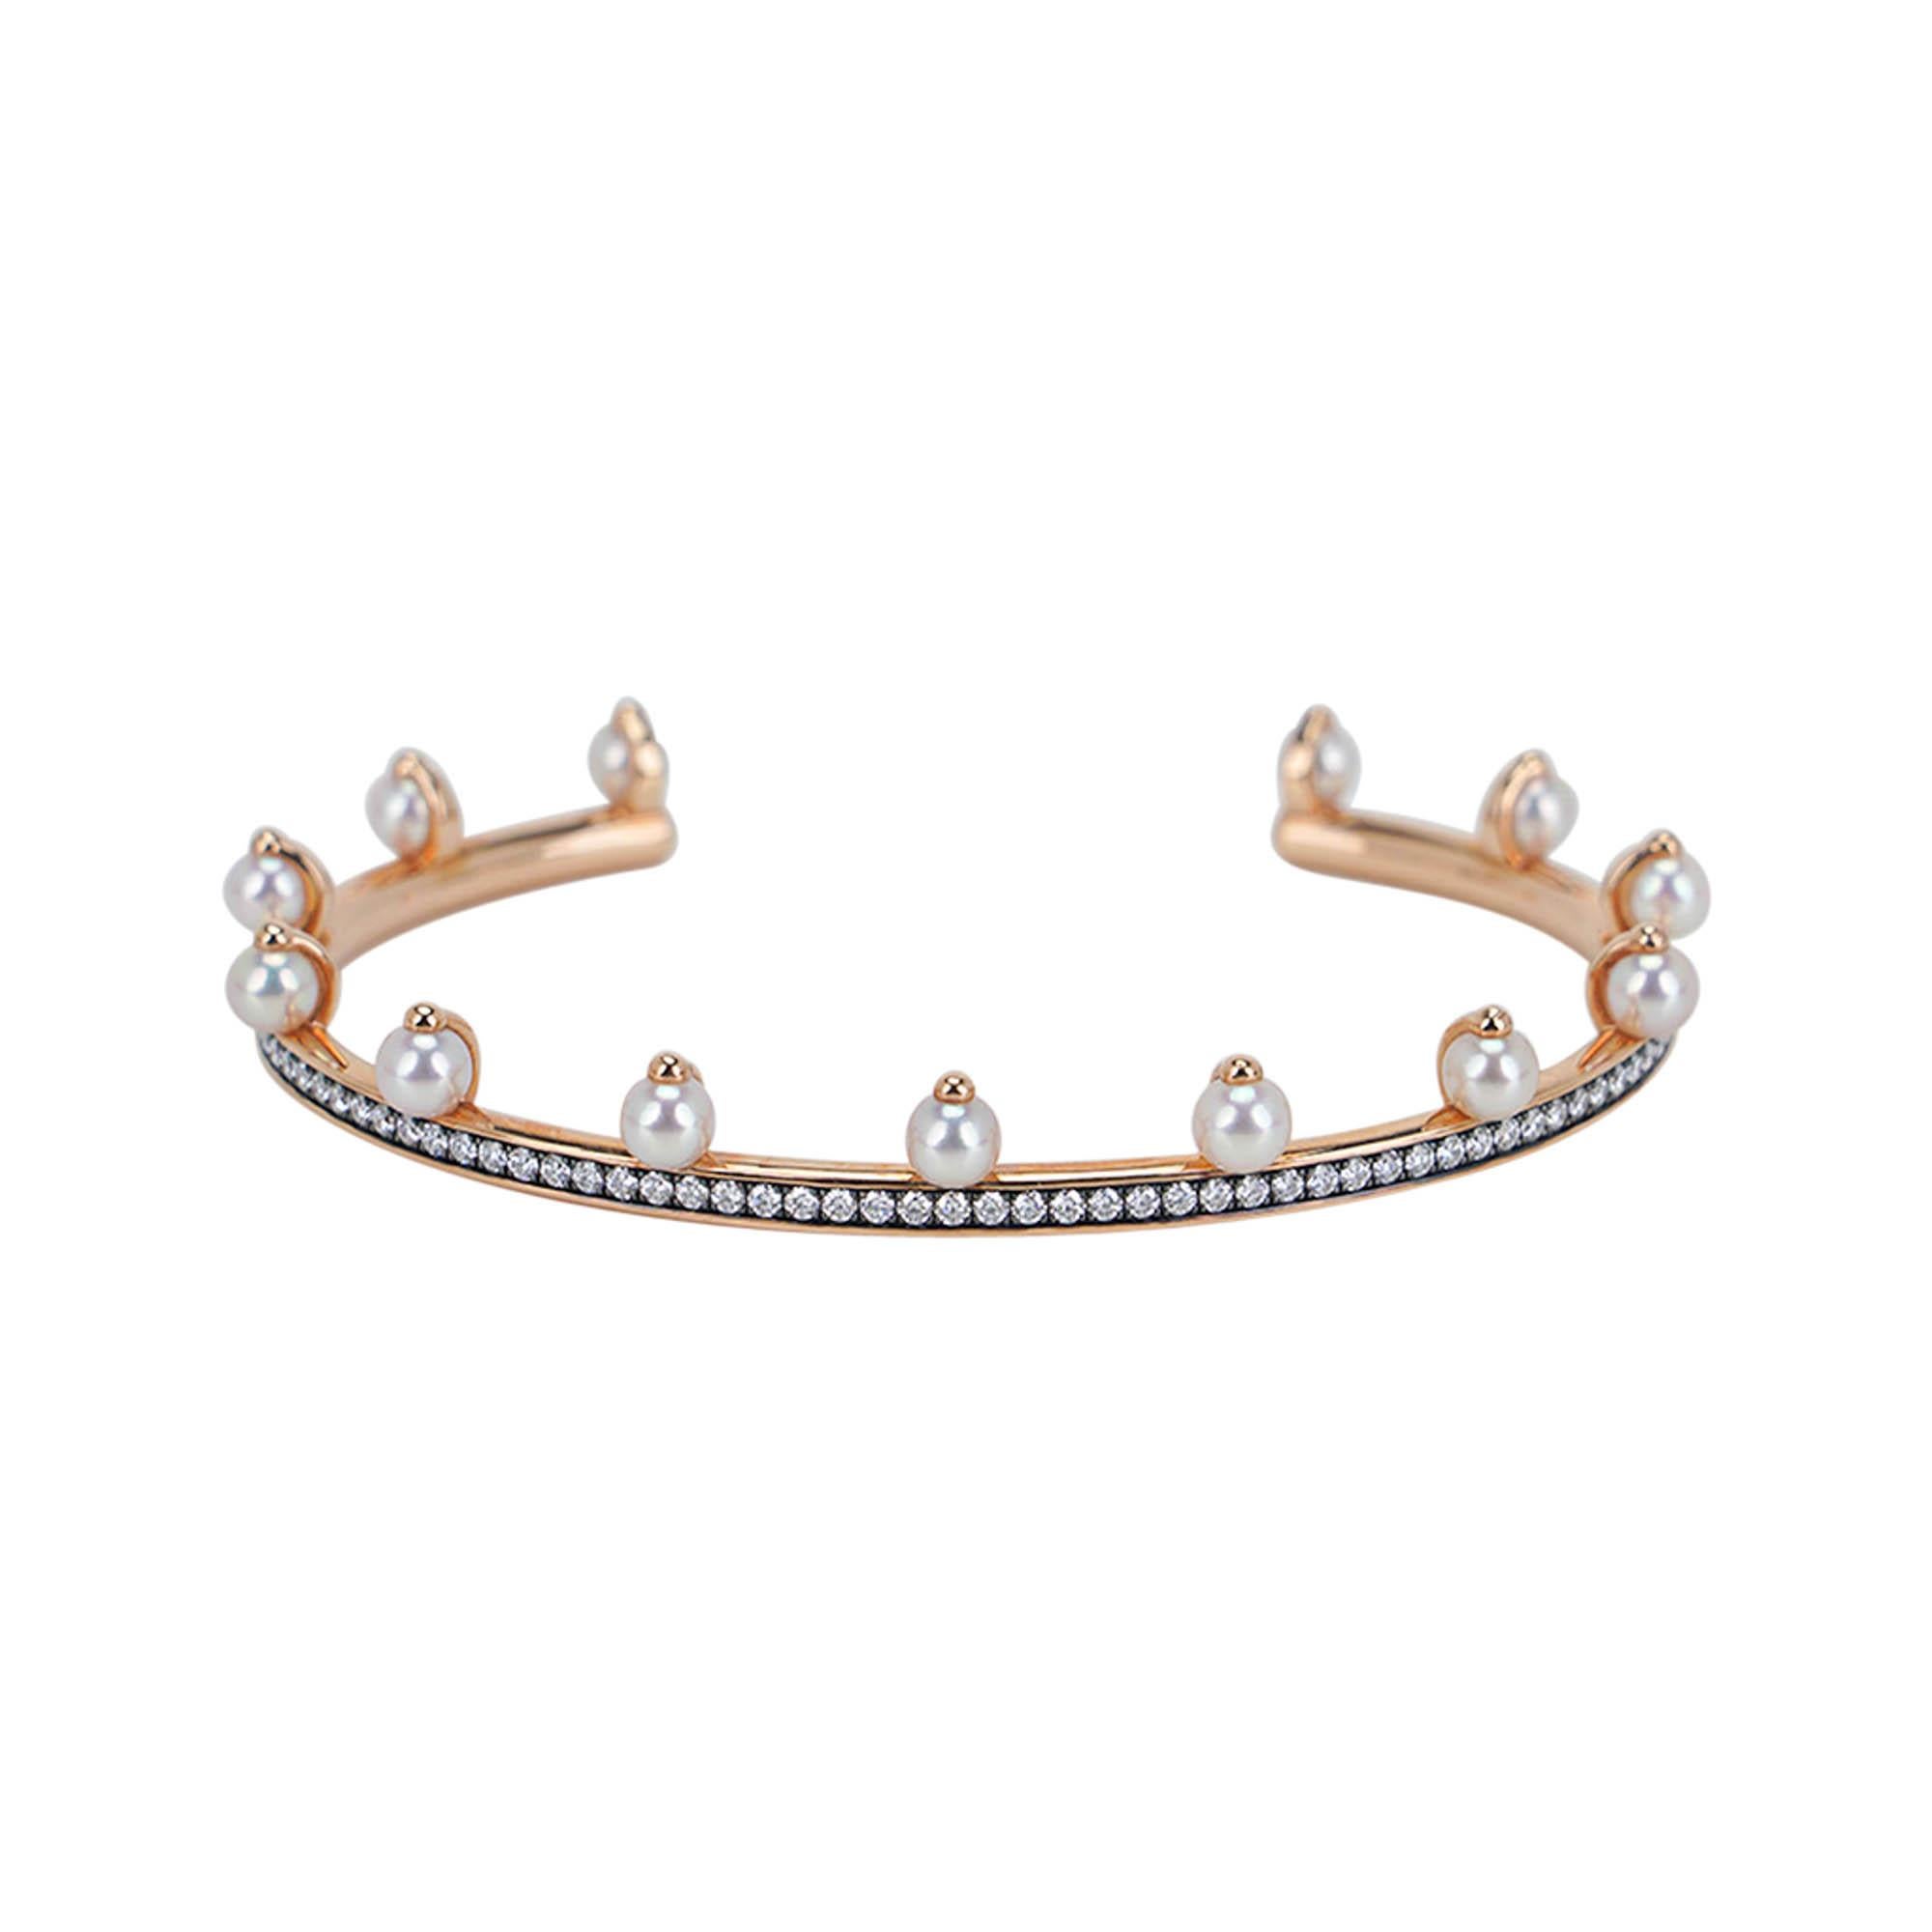 Brilliant Cut Hermes Chandra Jonc Pearl and Diamond Cuff Bracelet 18k Rose Gold For Sale